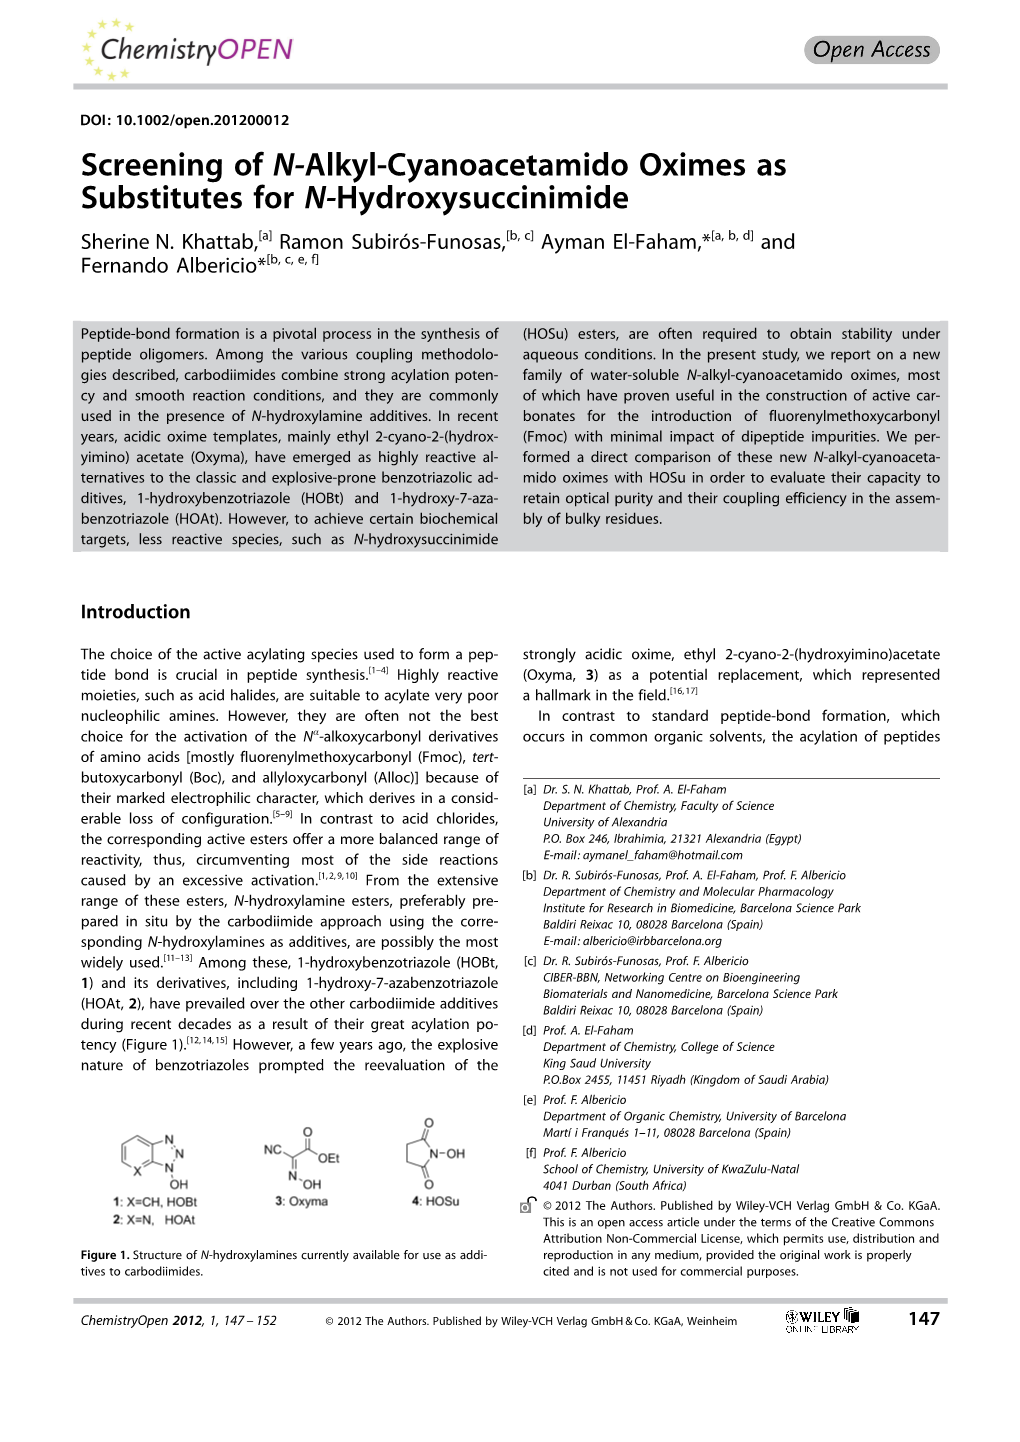 Screening of N-Alkyl-Cyanoacetamido Oximes As Substitutes for N-Hydroxysuccinimide Sherine N